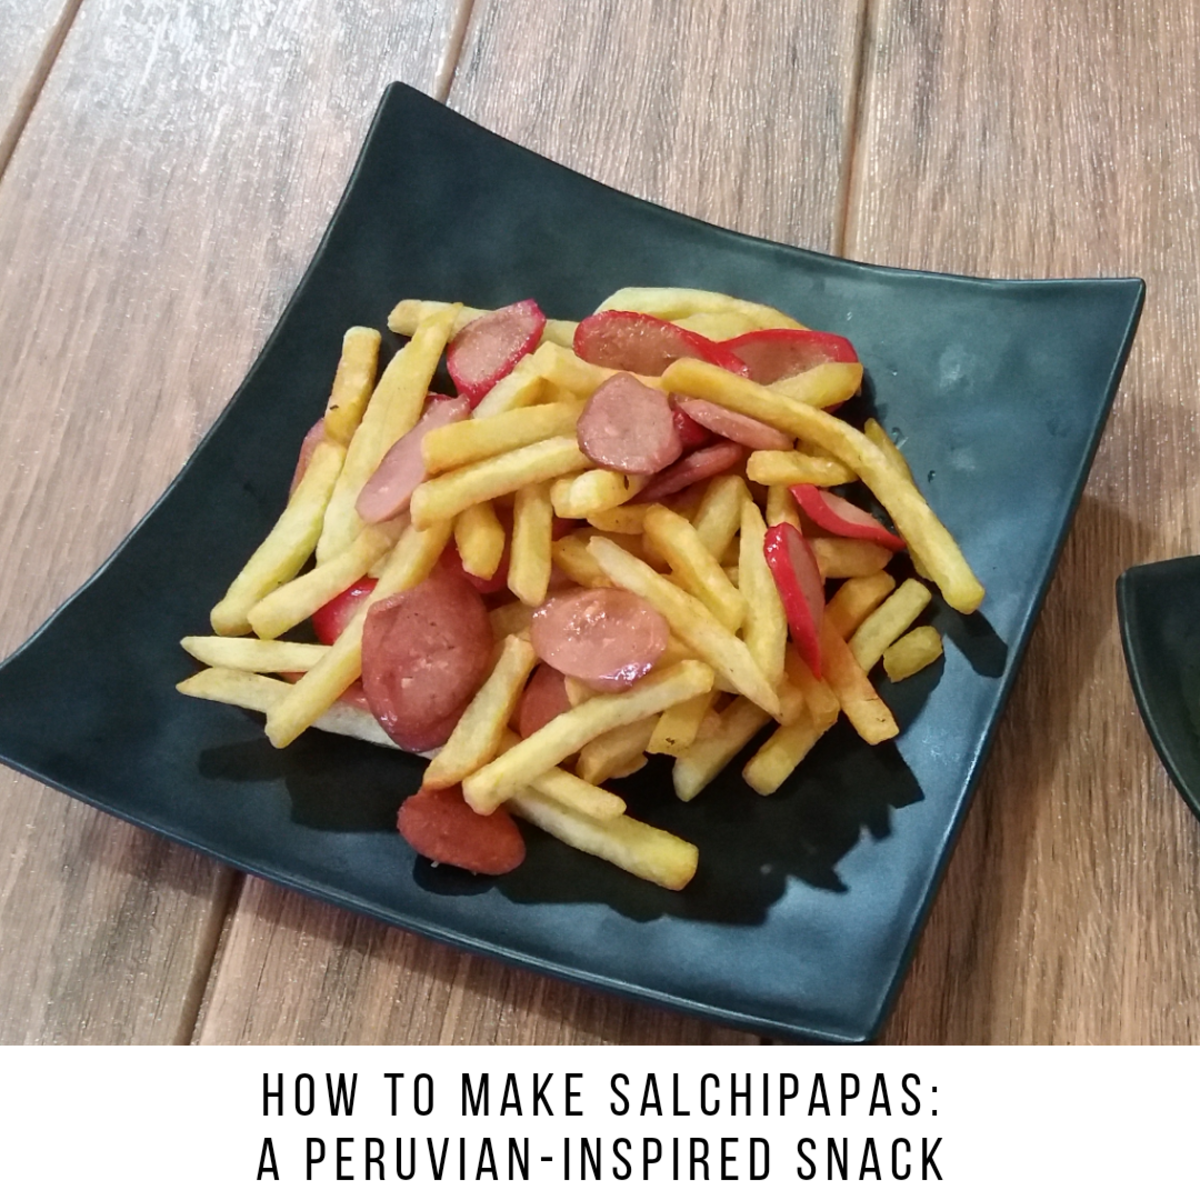 How to make salchipapas, a Peruvian-inspired snack